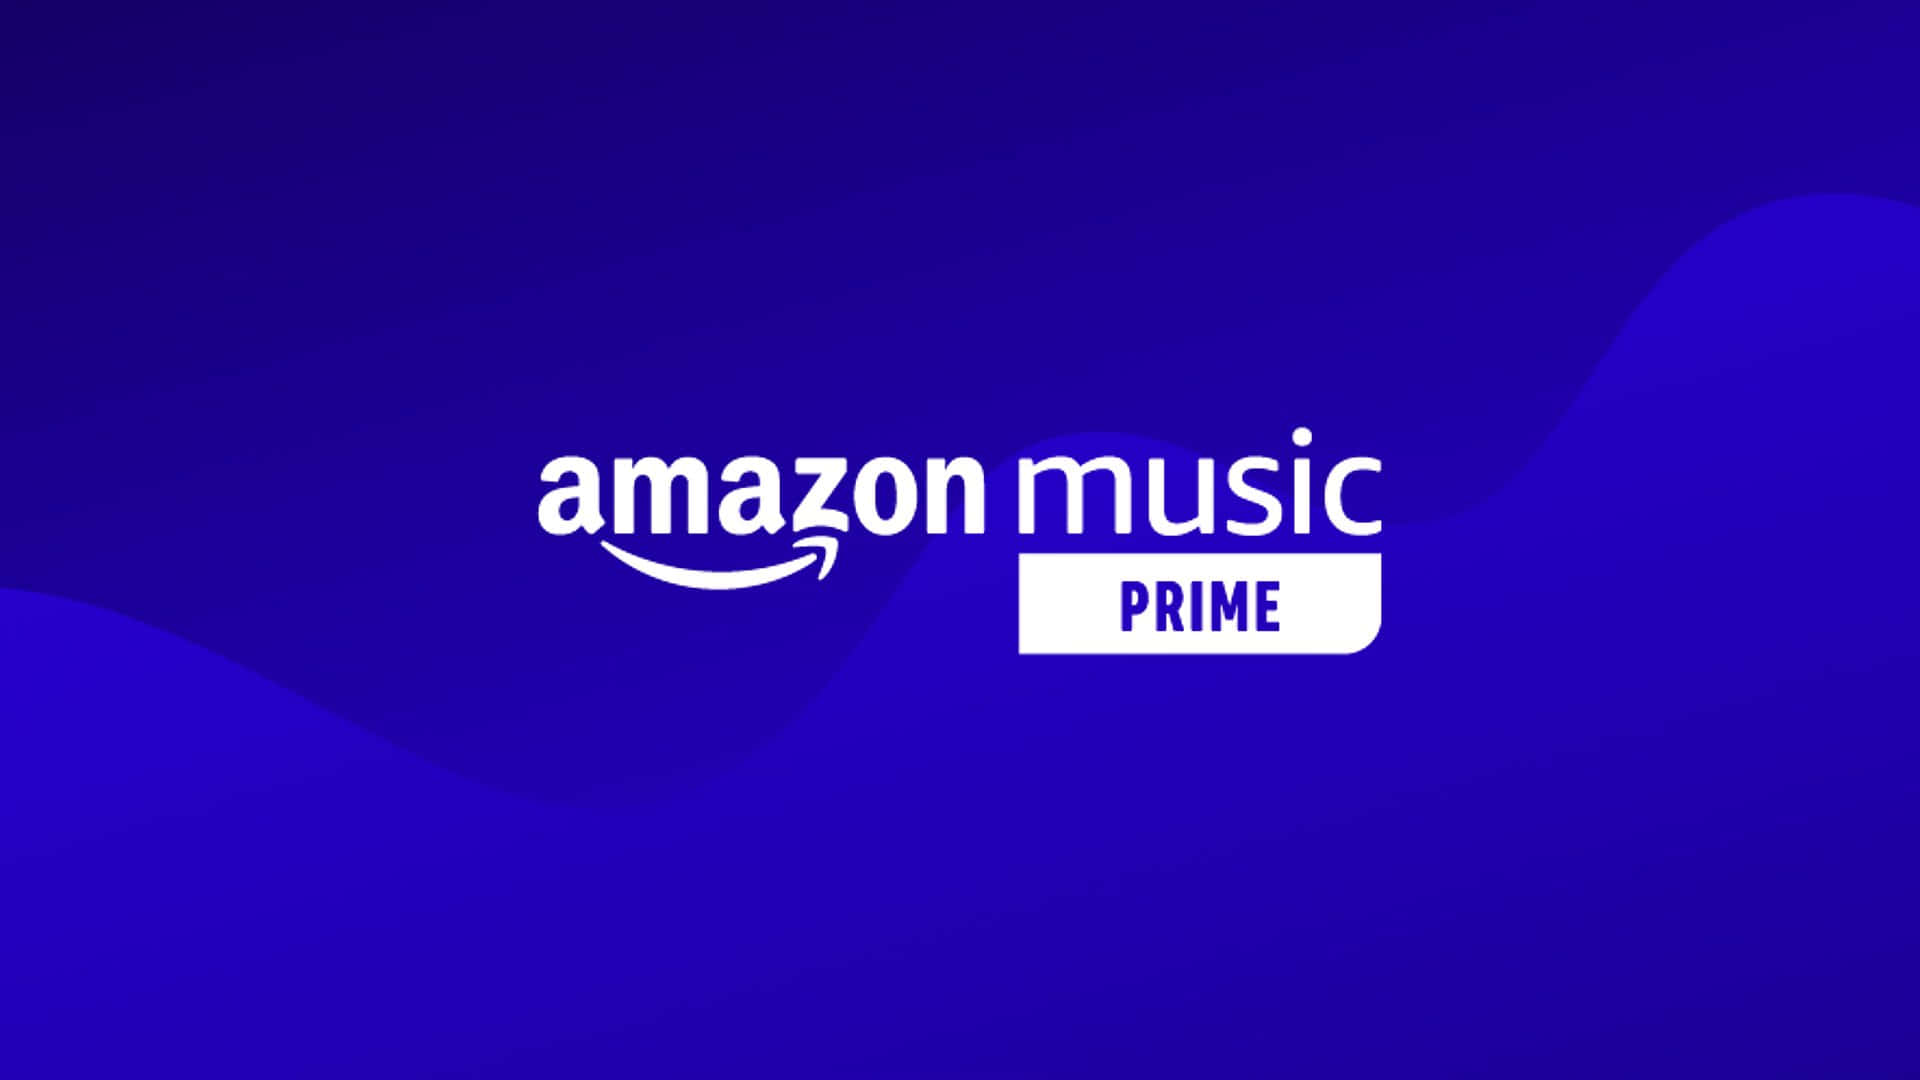 Amazon Music Prime Logo On A Blue Background